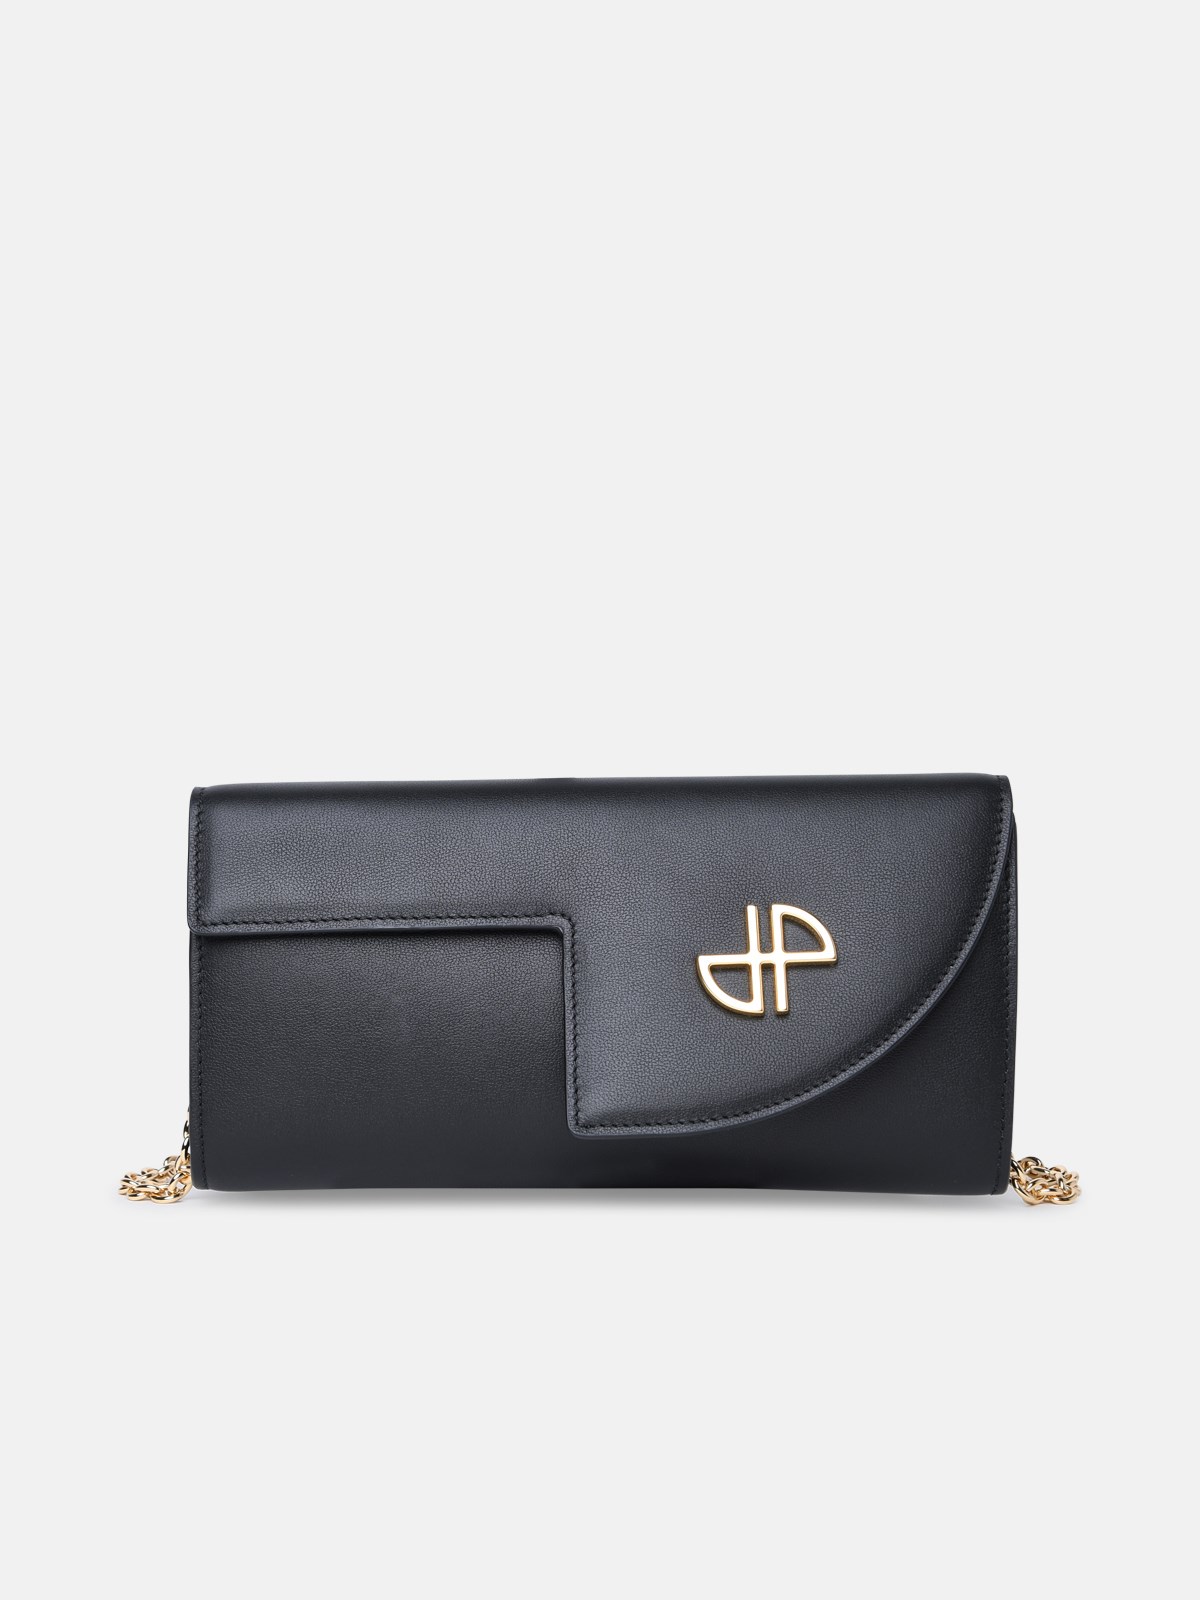 Patou 'jp' Black Leather Crossbody Bag